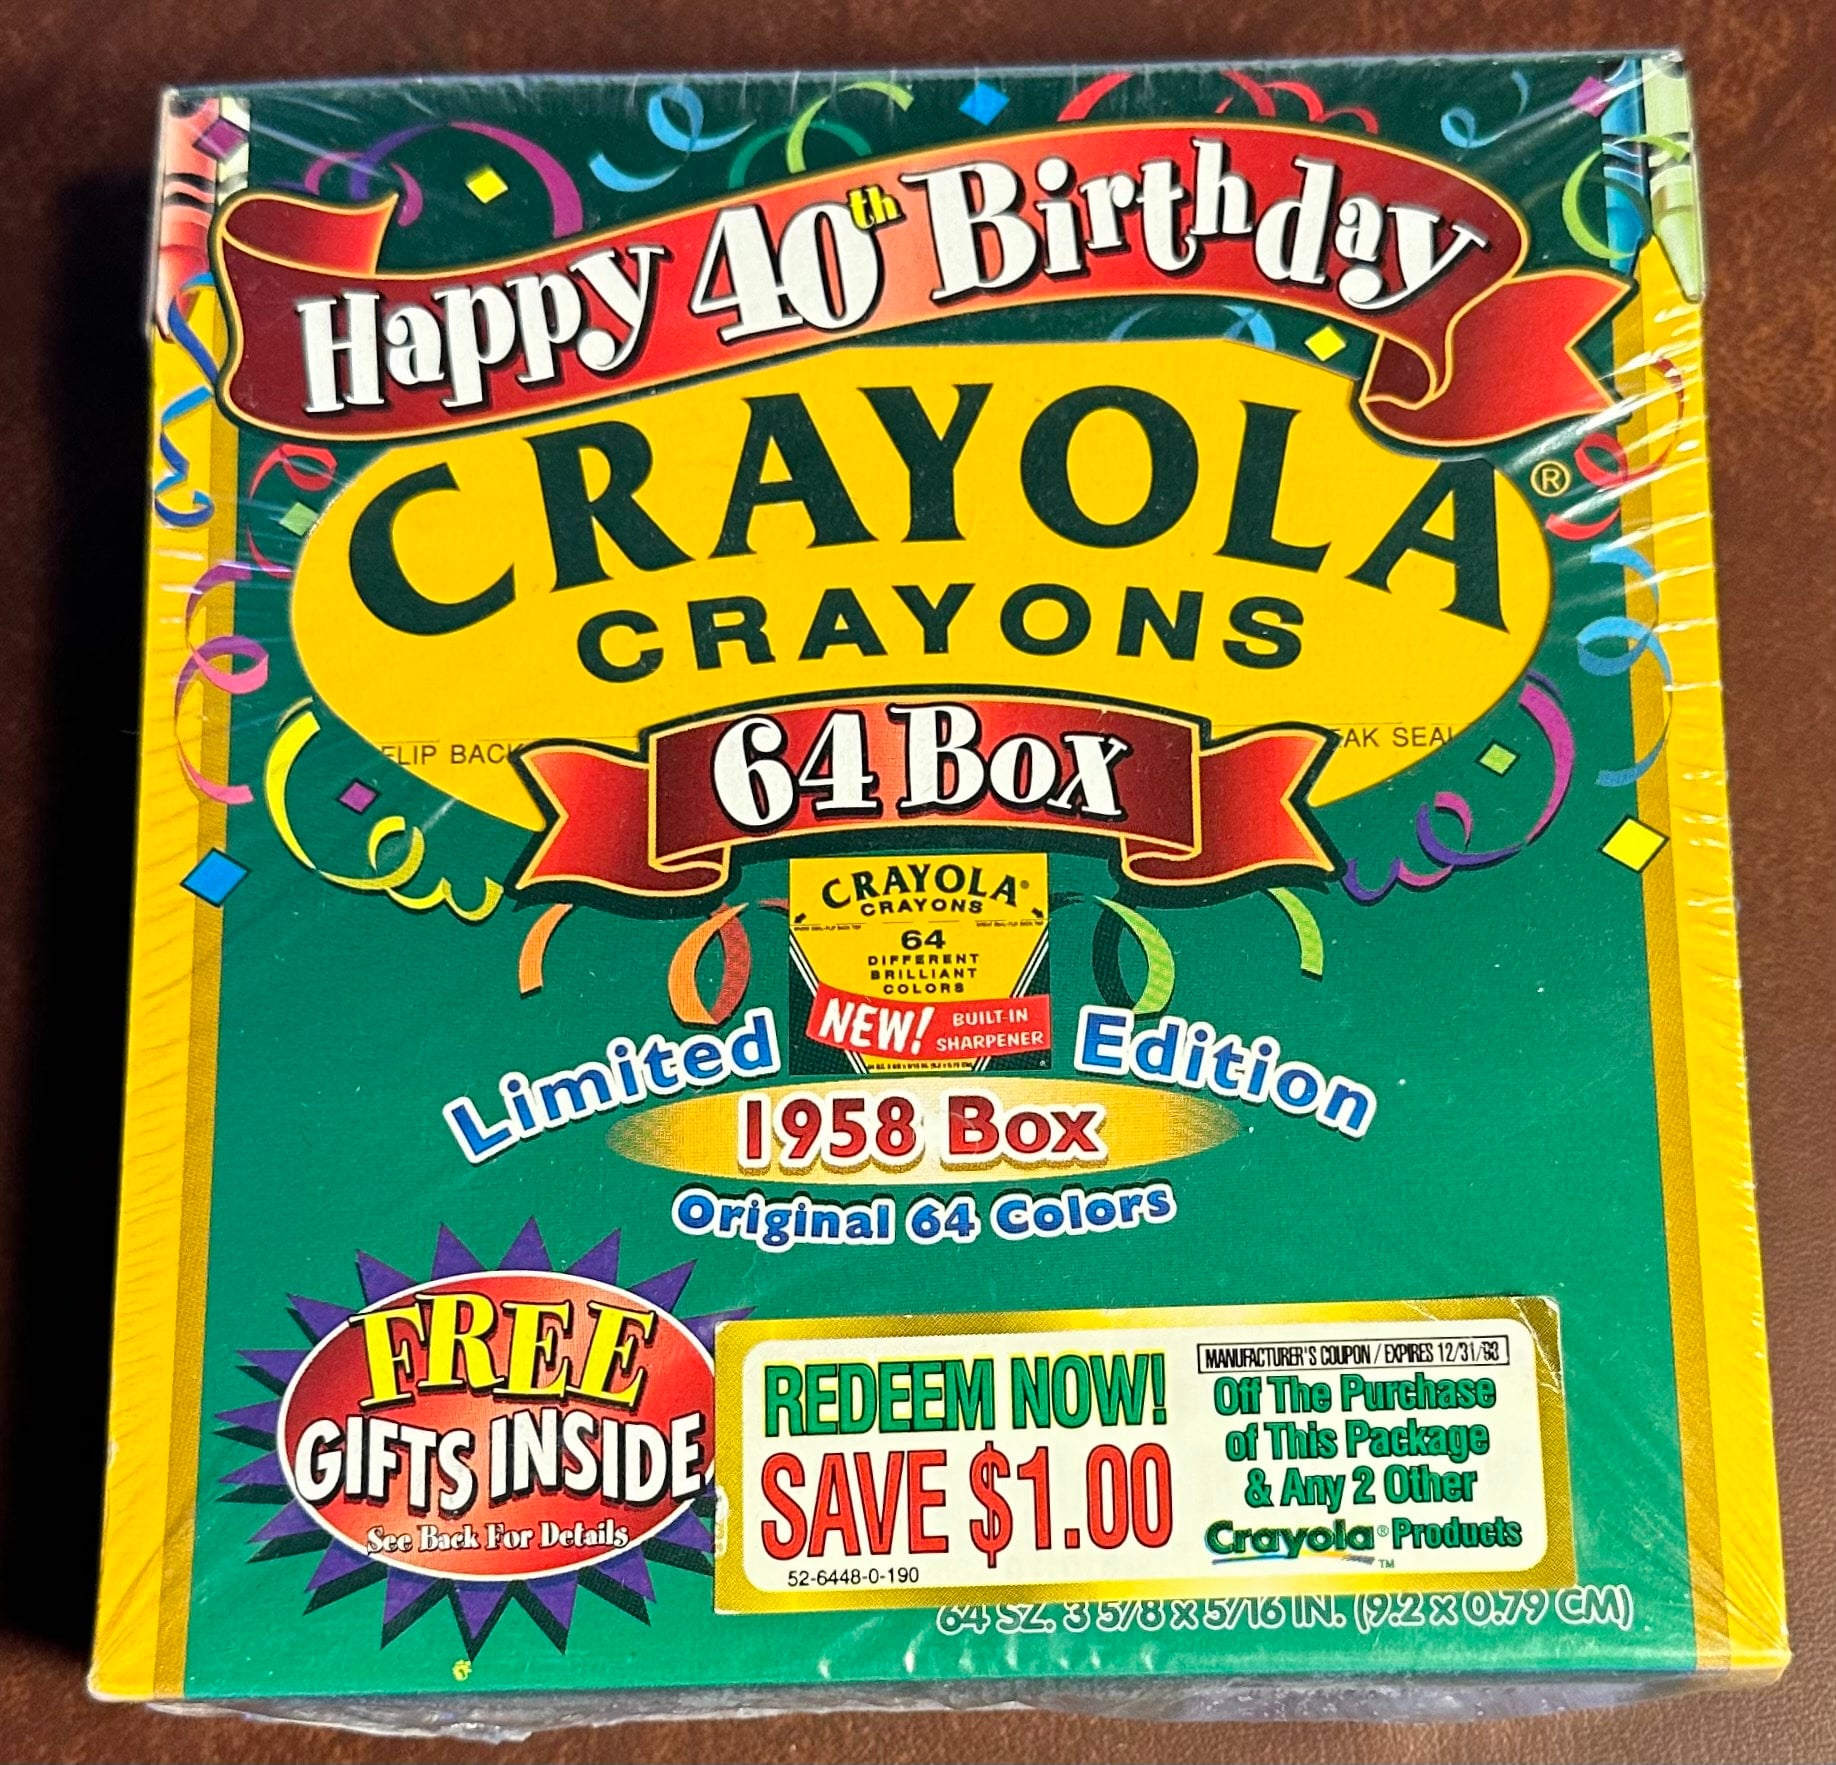 Crayola Silly Scents Dough, 50 pk.